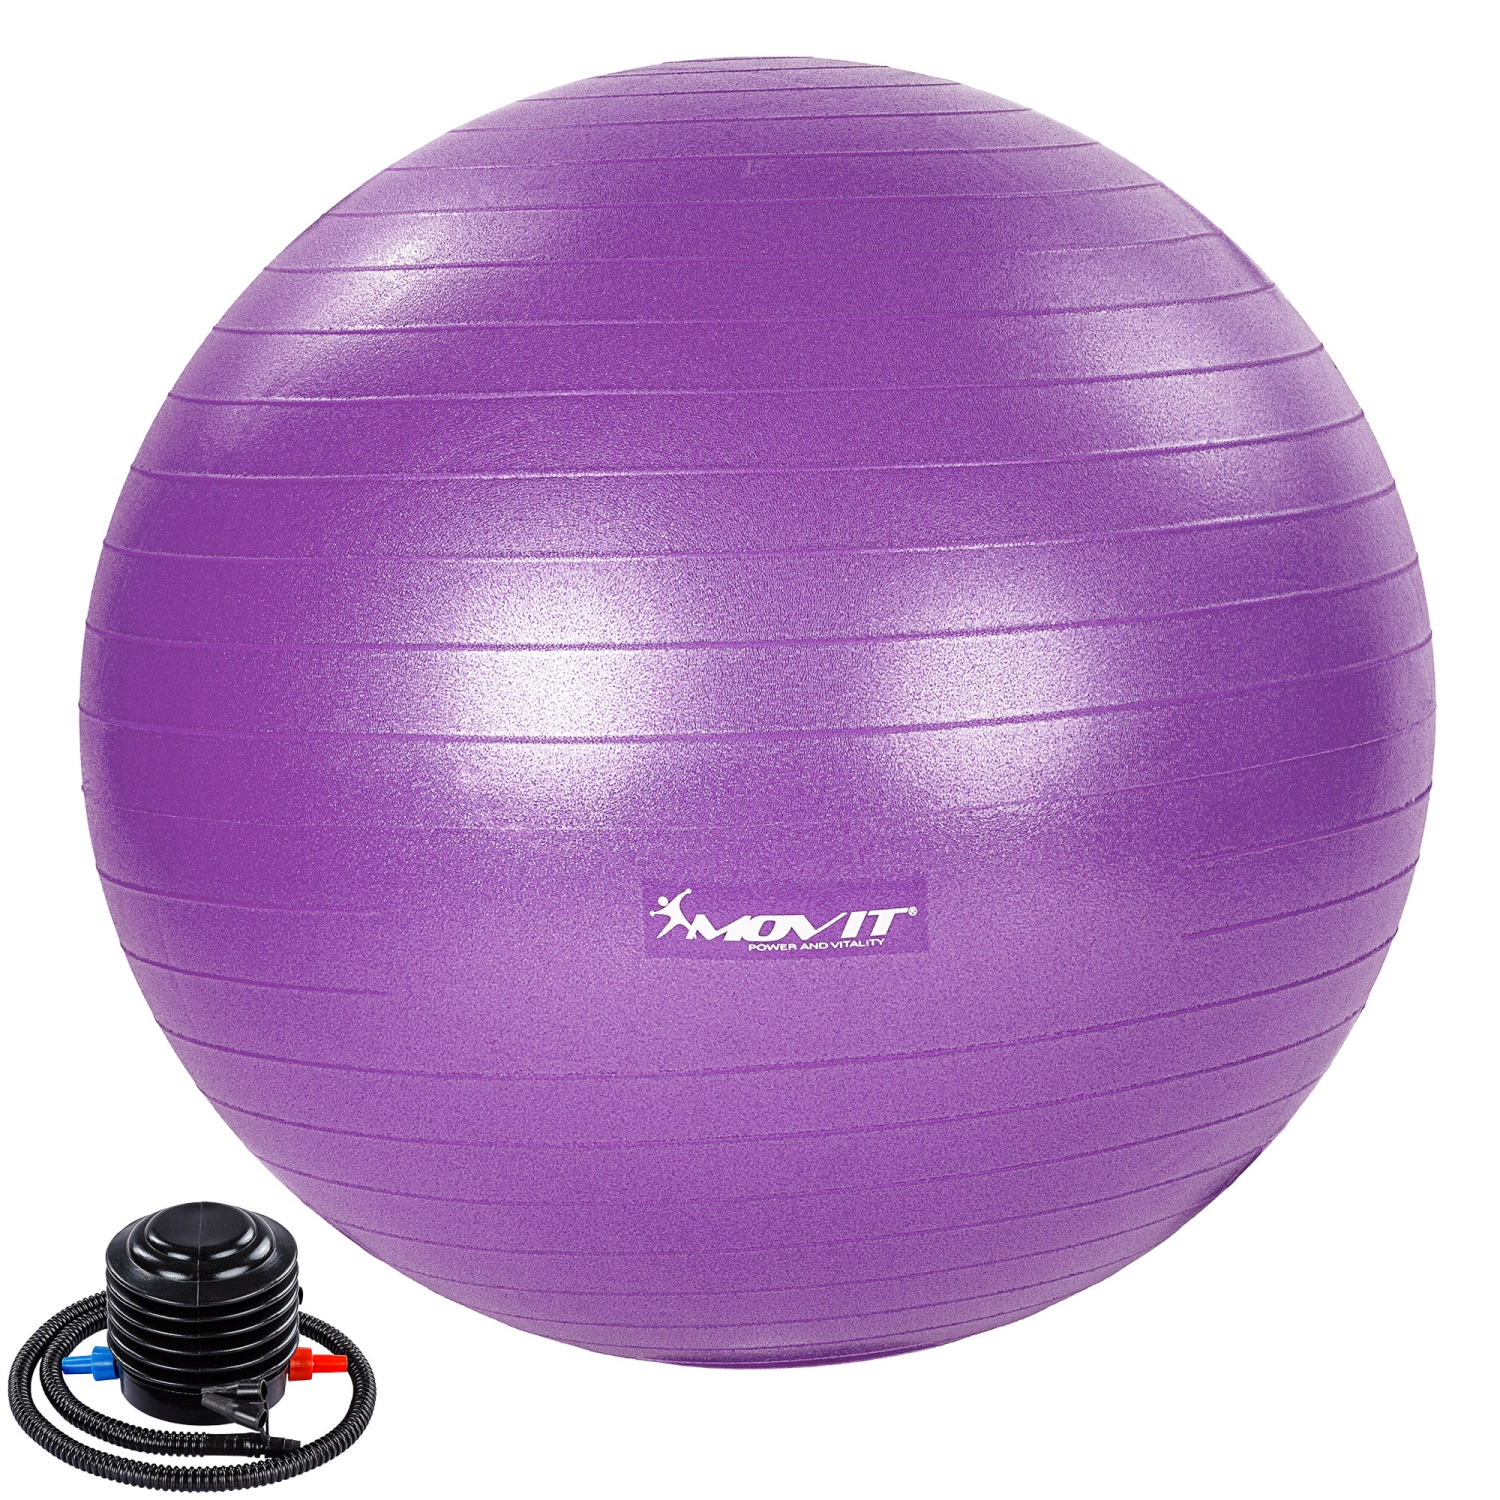 Yoga bal – Pilates bal – Fitness bal – 65 cm – Inclusief pomp – Paars